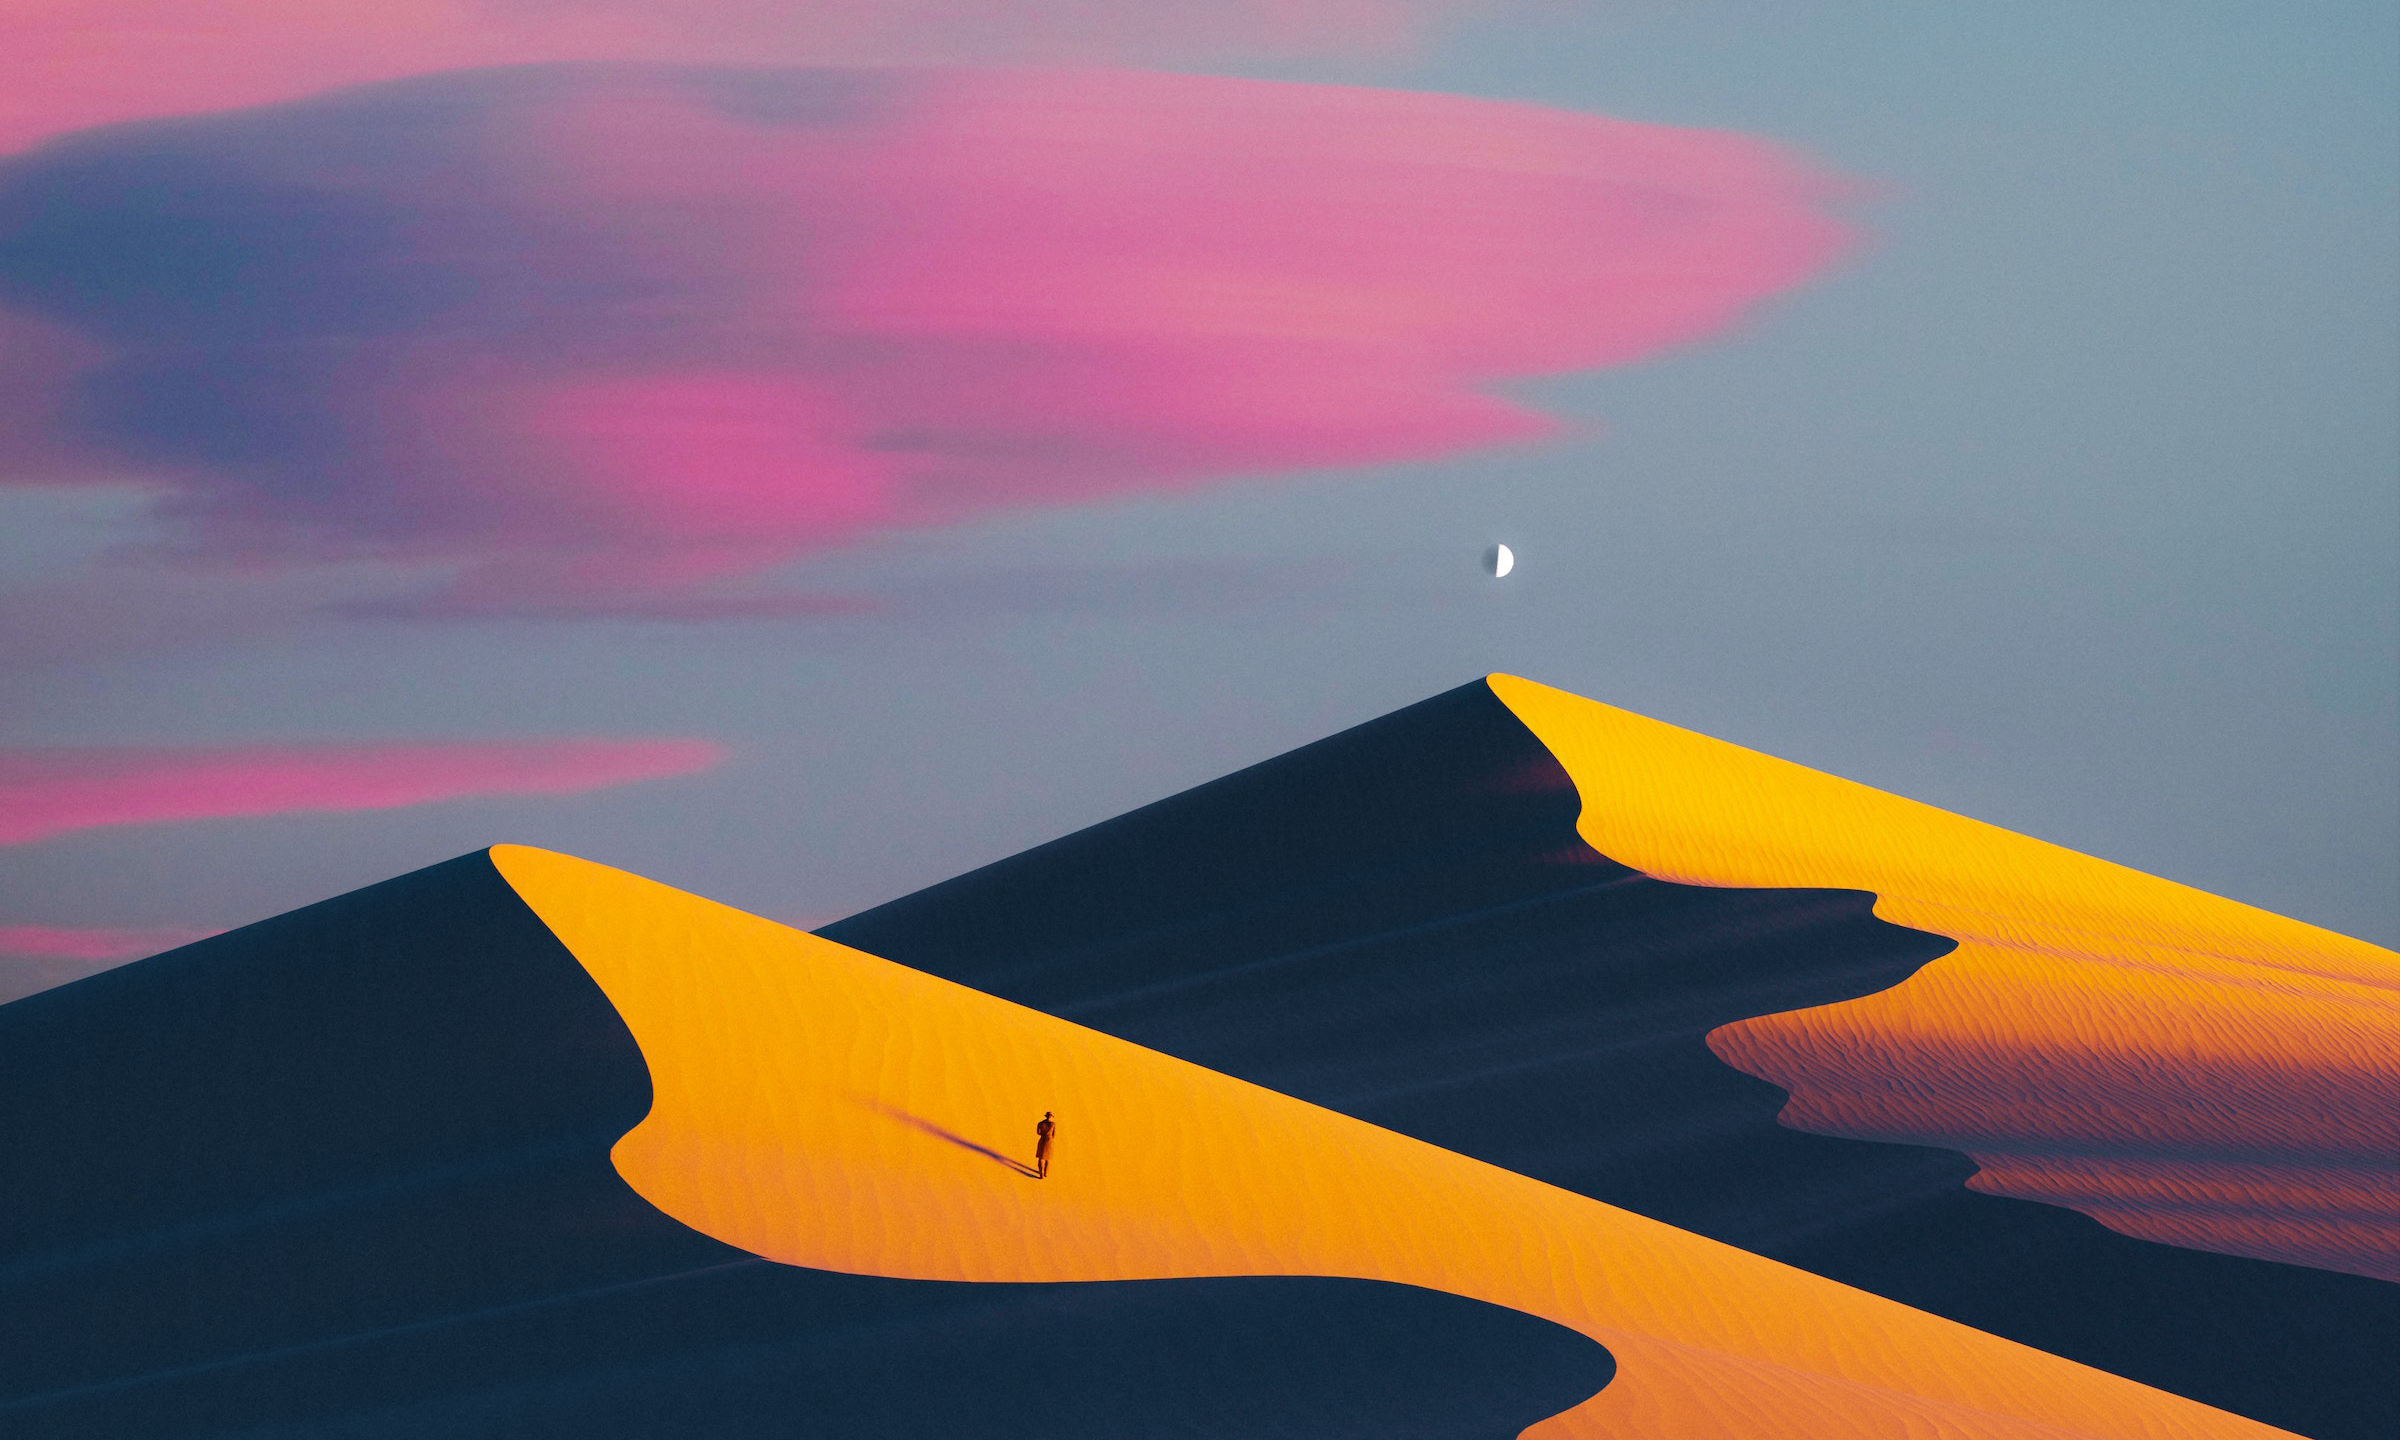 Digital Art Artwork Illustration Dunes Desert Landscape Sand Sky Clouds Sunlight Moon Simple Backgro 2400x1440